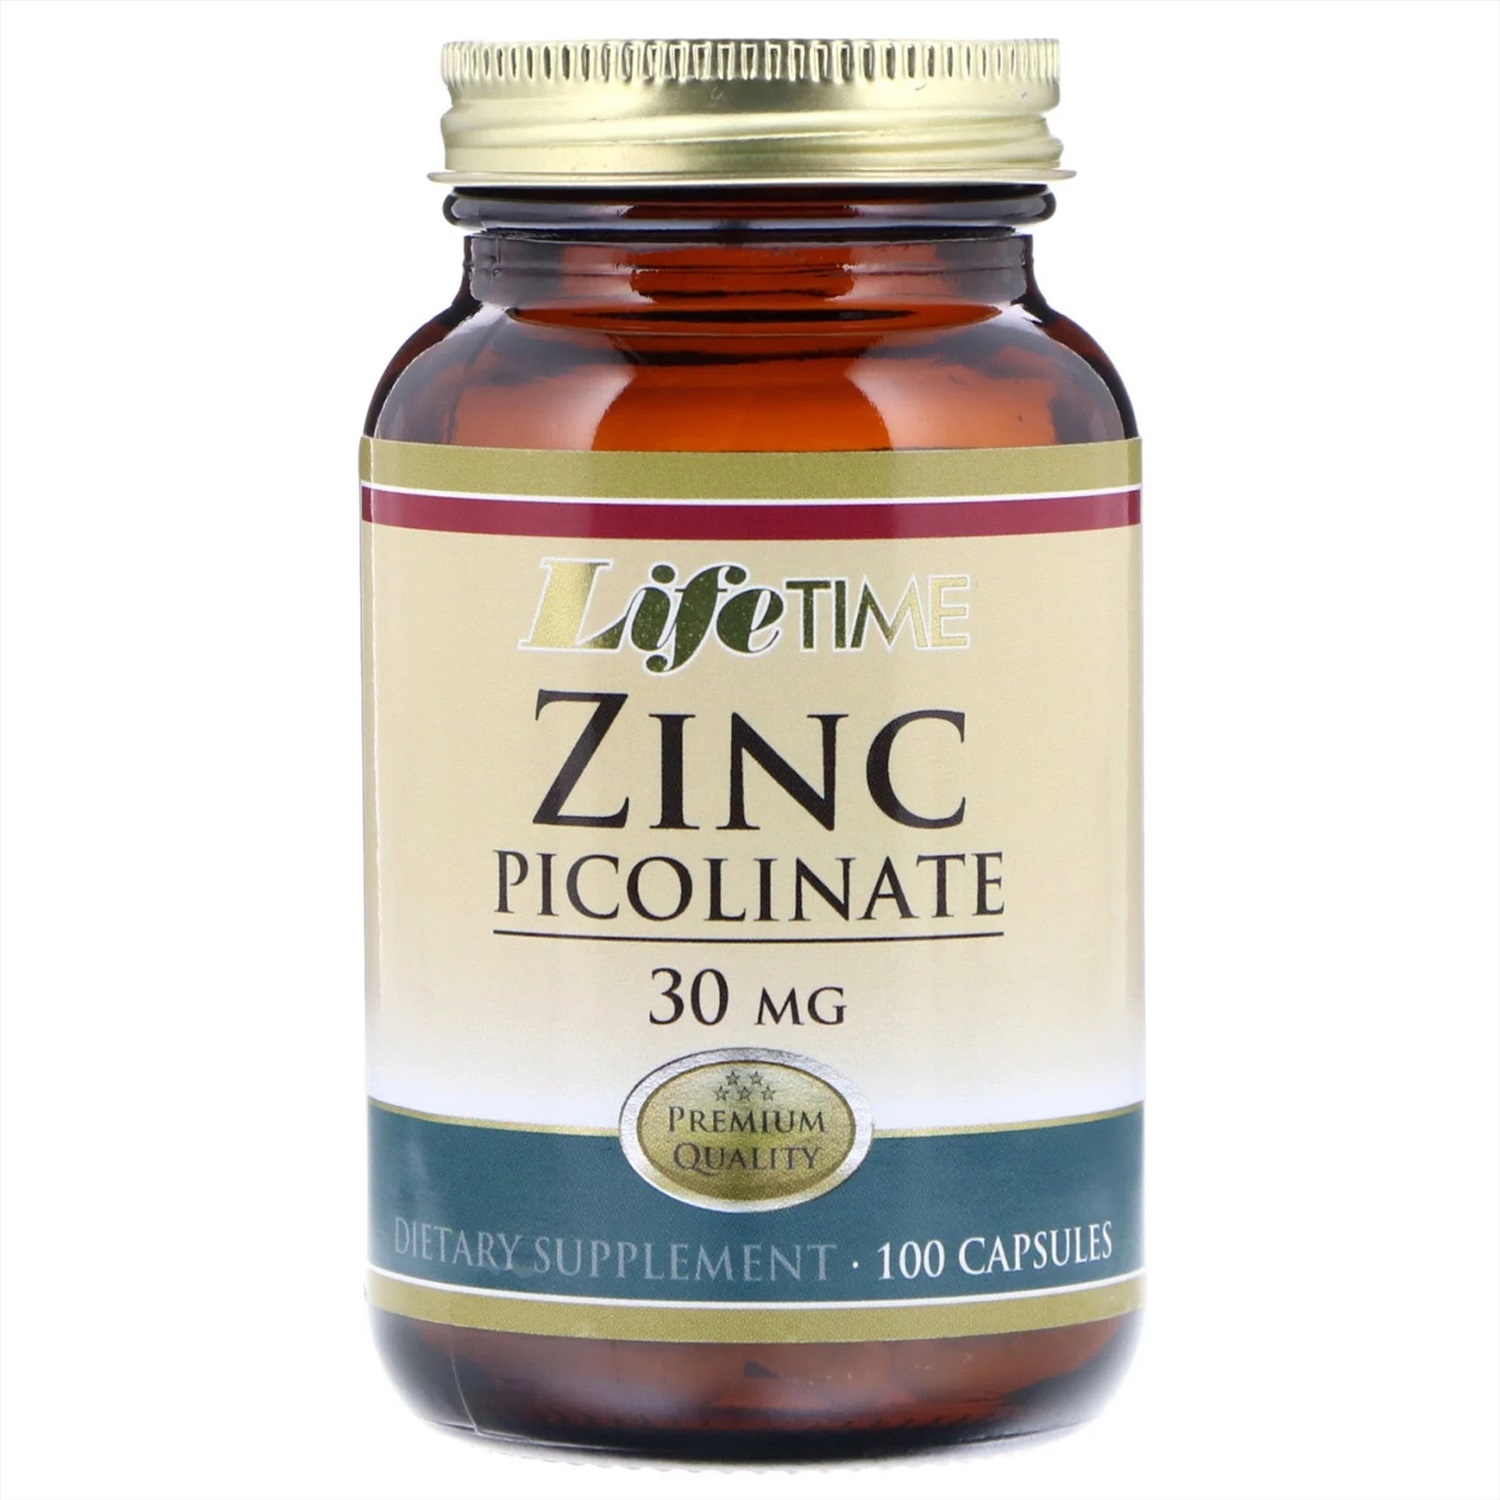 Zinc picolinate 50. Цинк пиколинат 30 мг Life time. Витамины цинк пиколинат. Цинк витамины Picolinate. Zinc Picolinate капсулы.